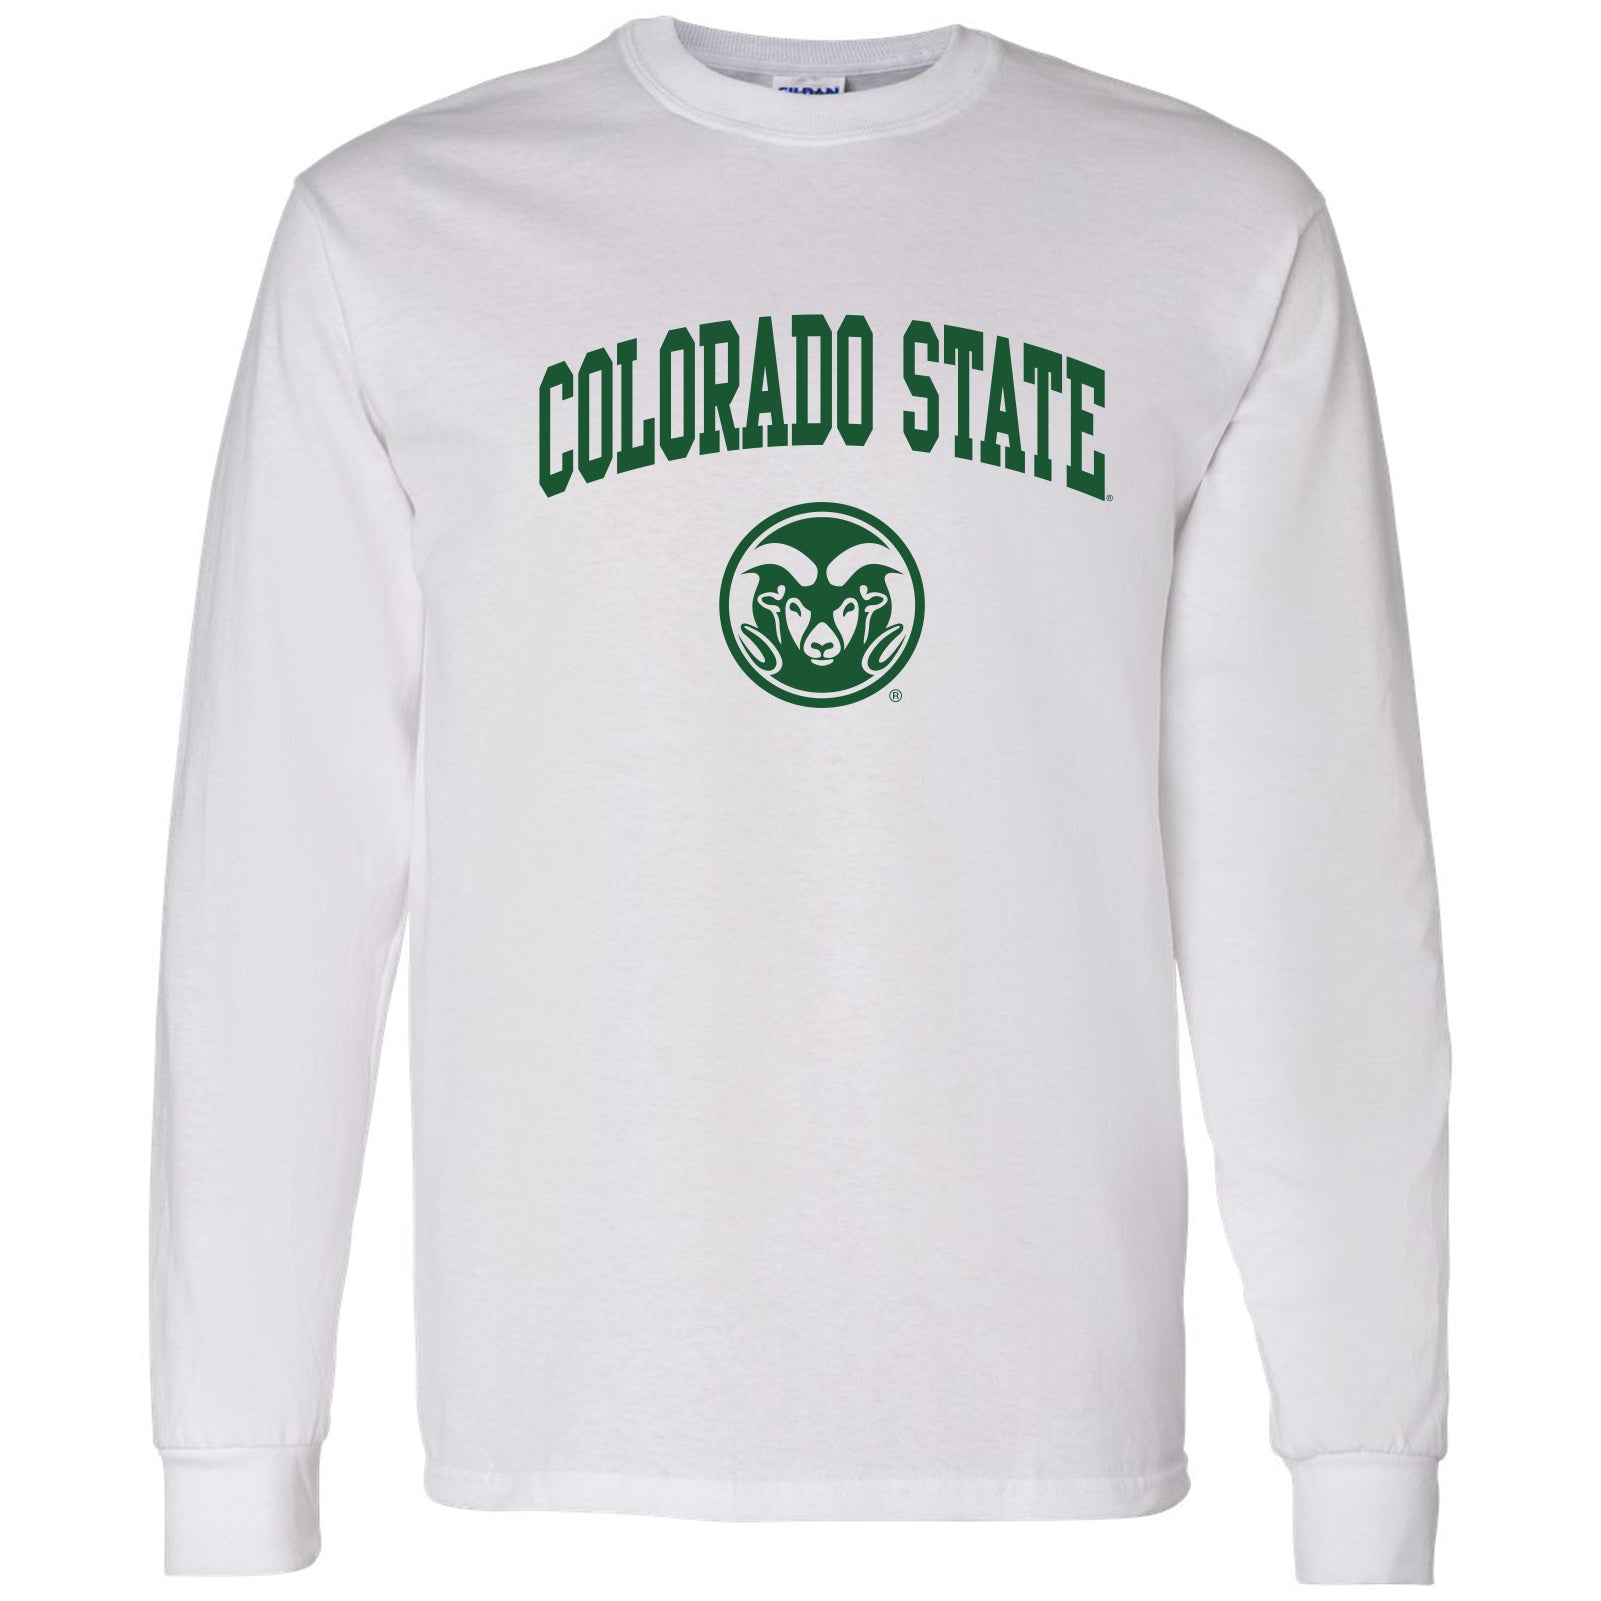 Trending] Buy New Custom Colorado State Rams Jersey White